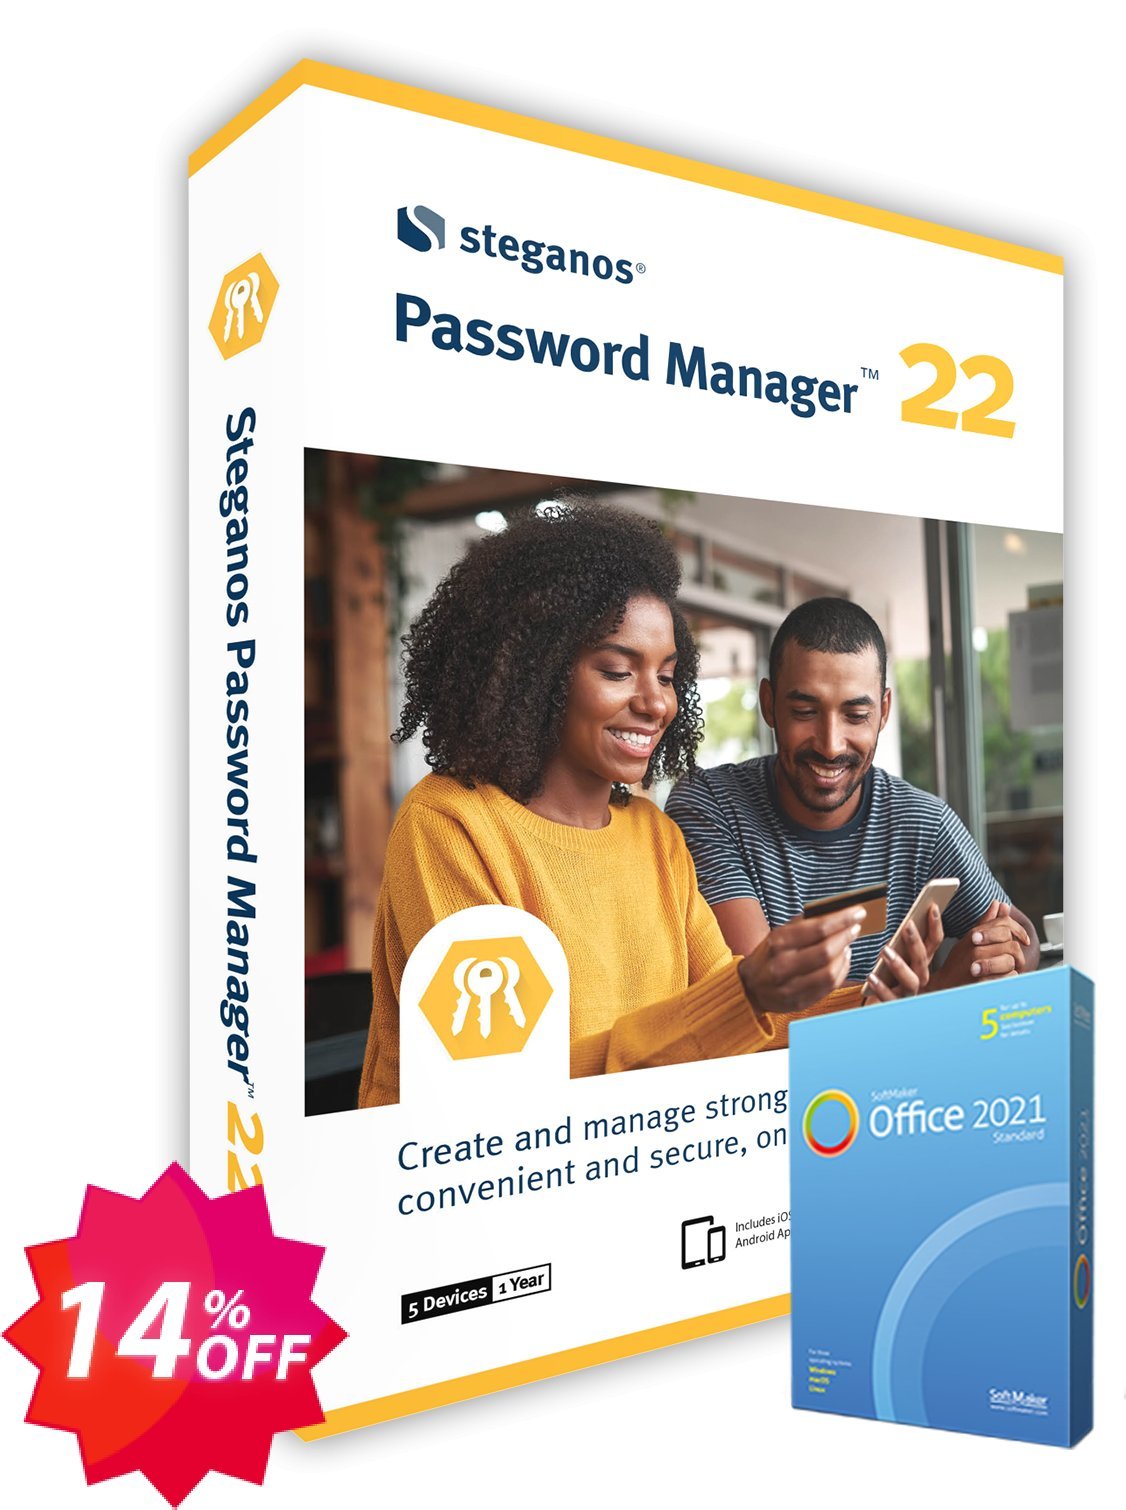 Steganos Password Manager 22 Coupon code 14% discount 